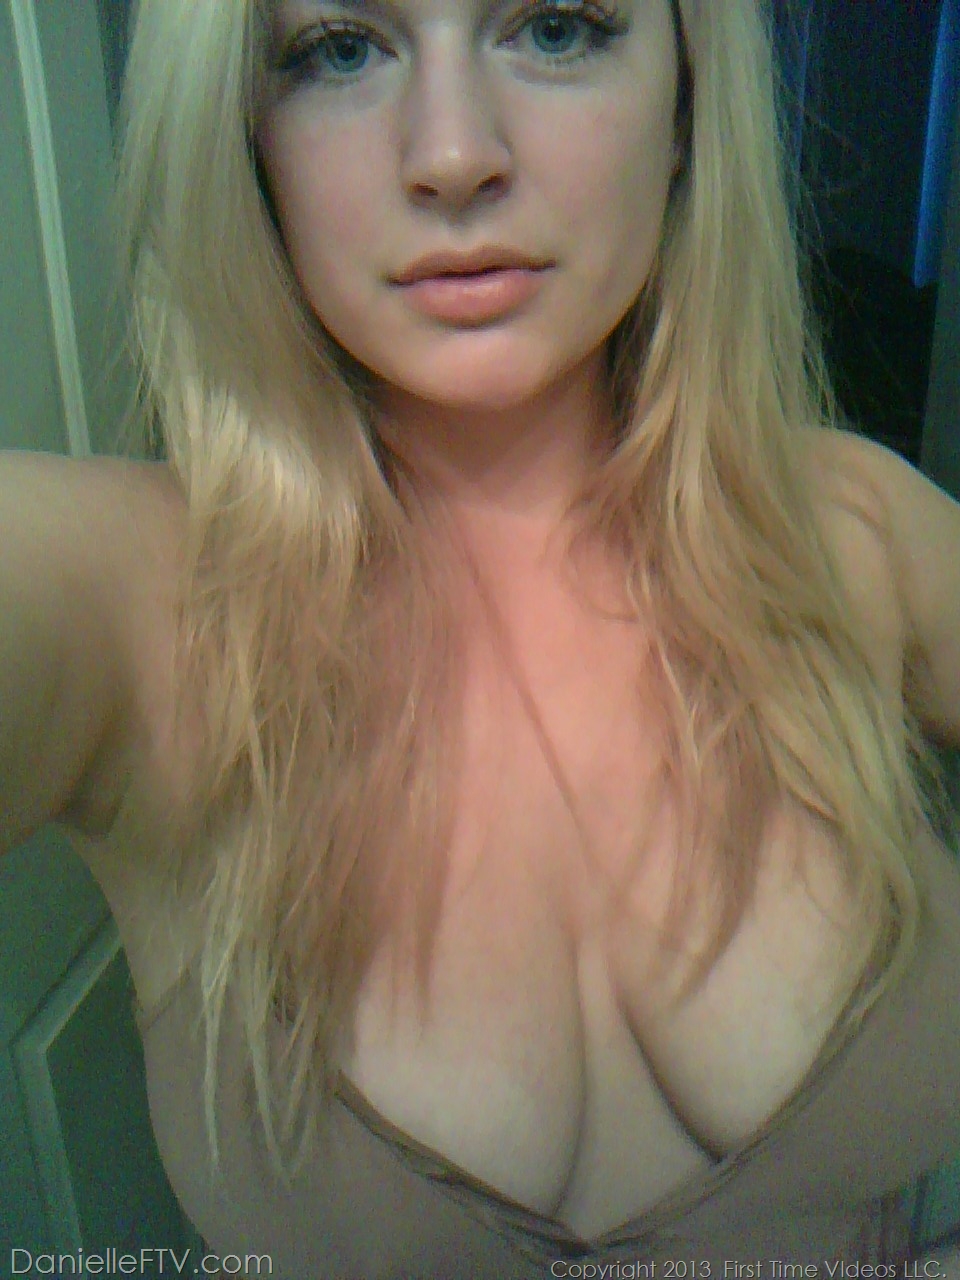 Blonde amateur Danielle Ftv dons numerous outfits for non nude selfies ポルノ写真 #422634186 | Danielle FTV Pics, Danielle Delaunay, Selfie, モバイルポルノ